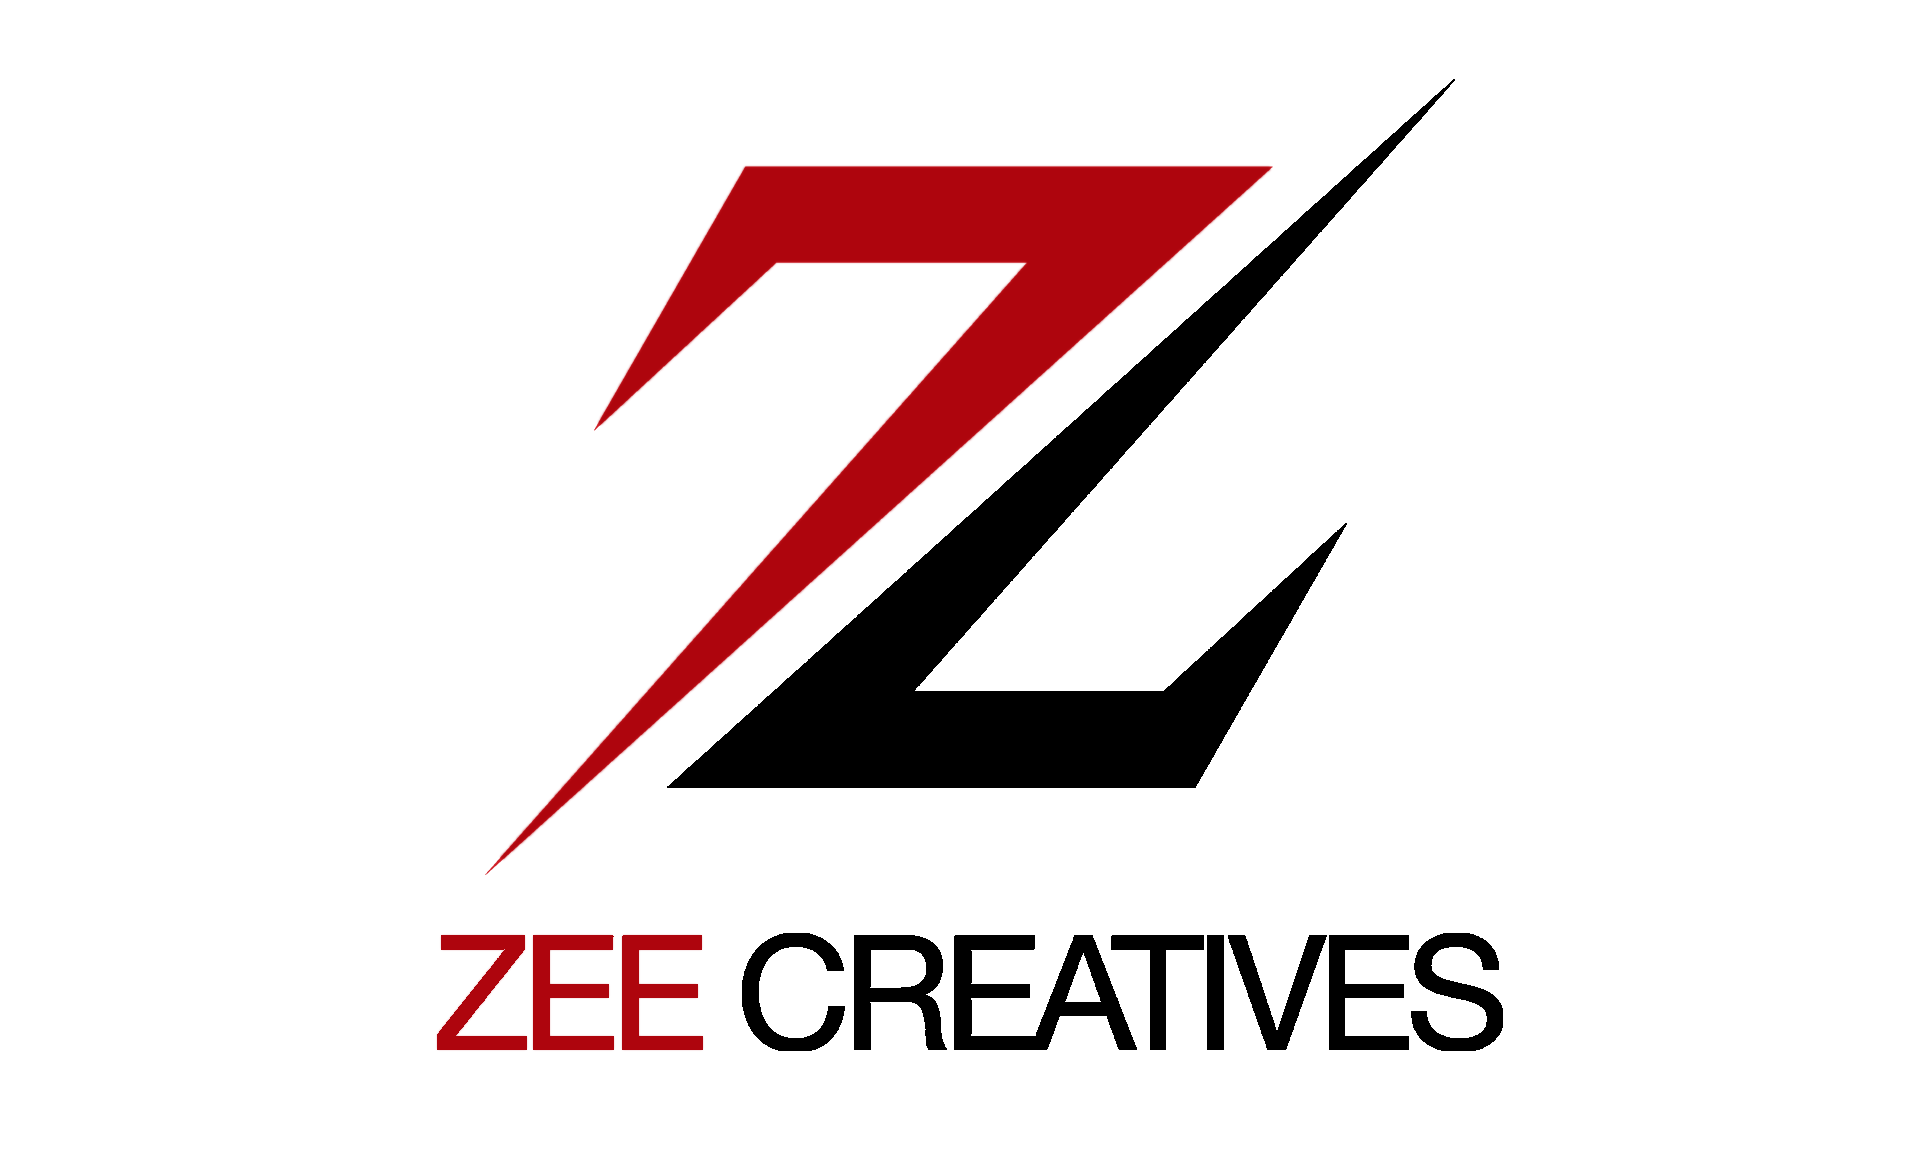 Zee creatives logo